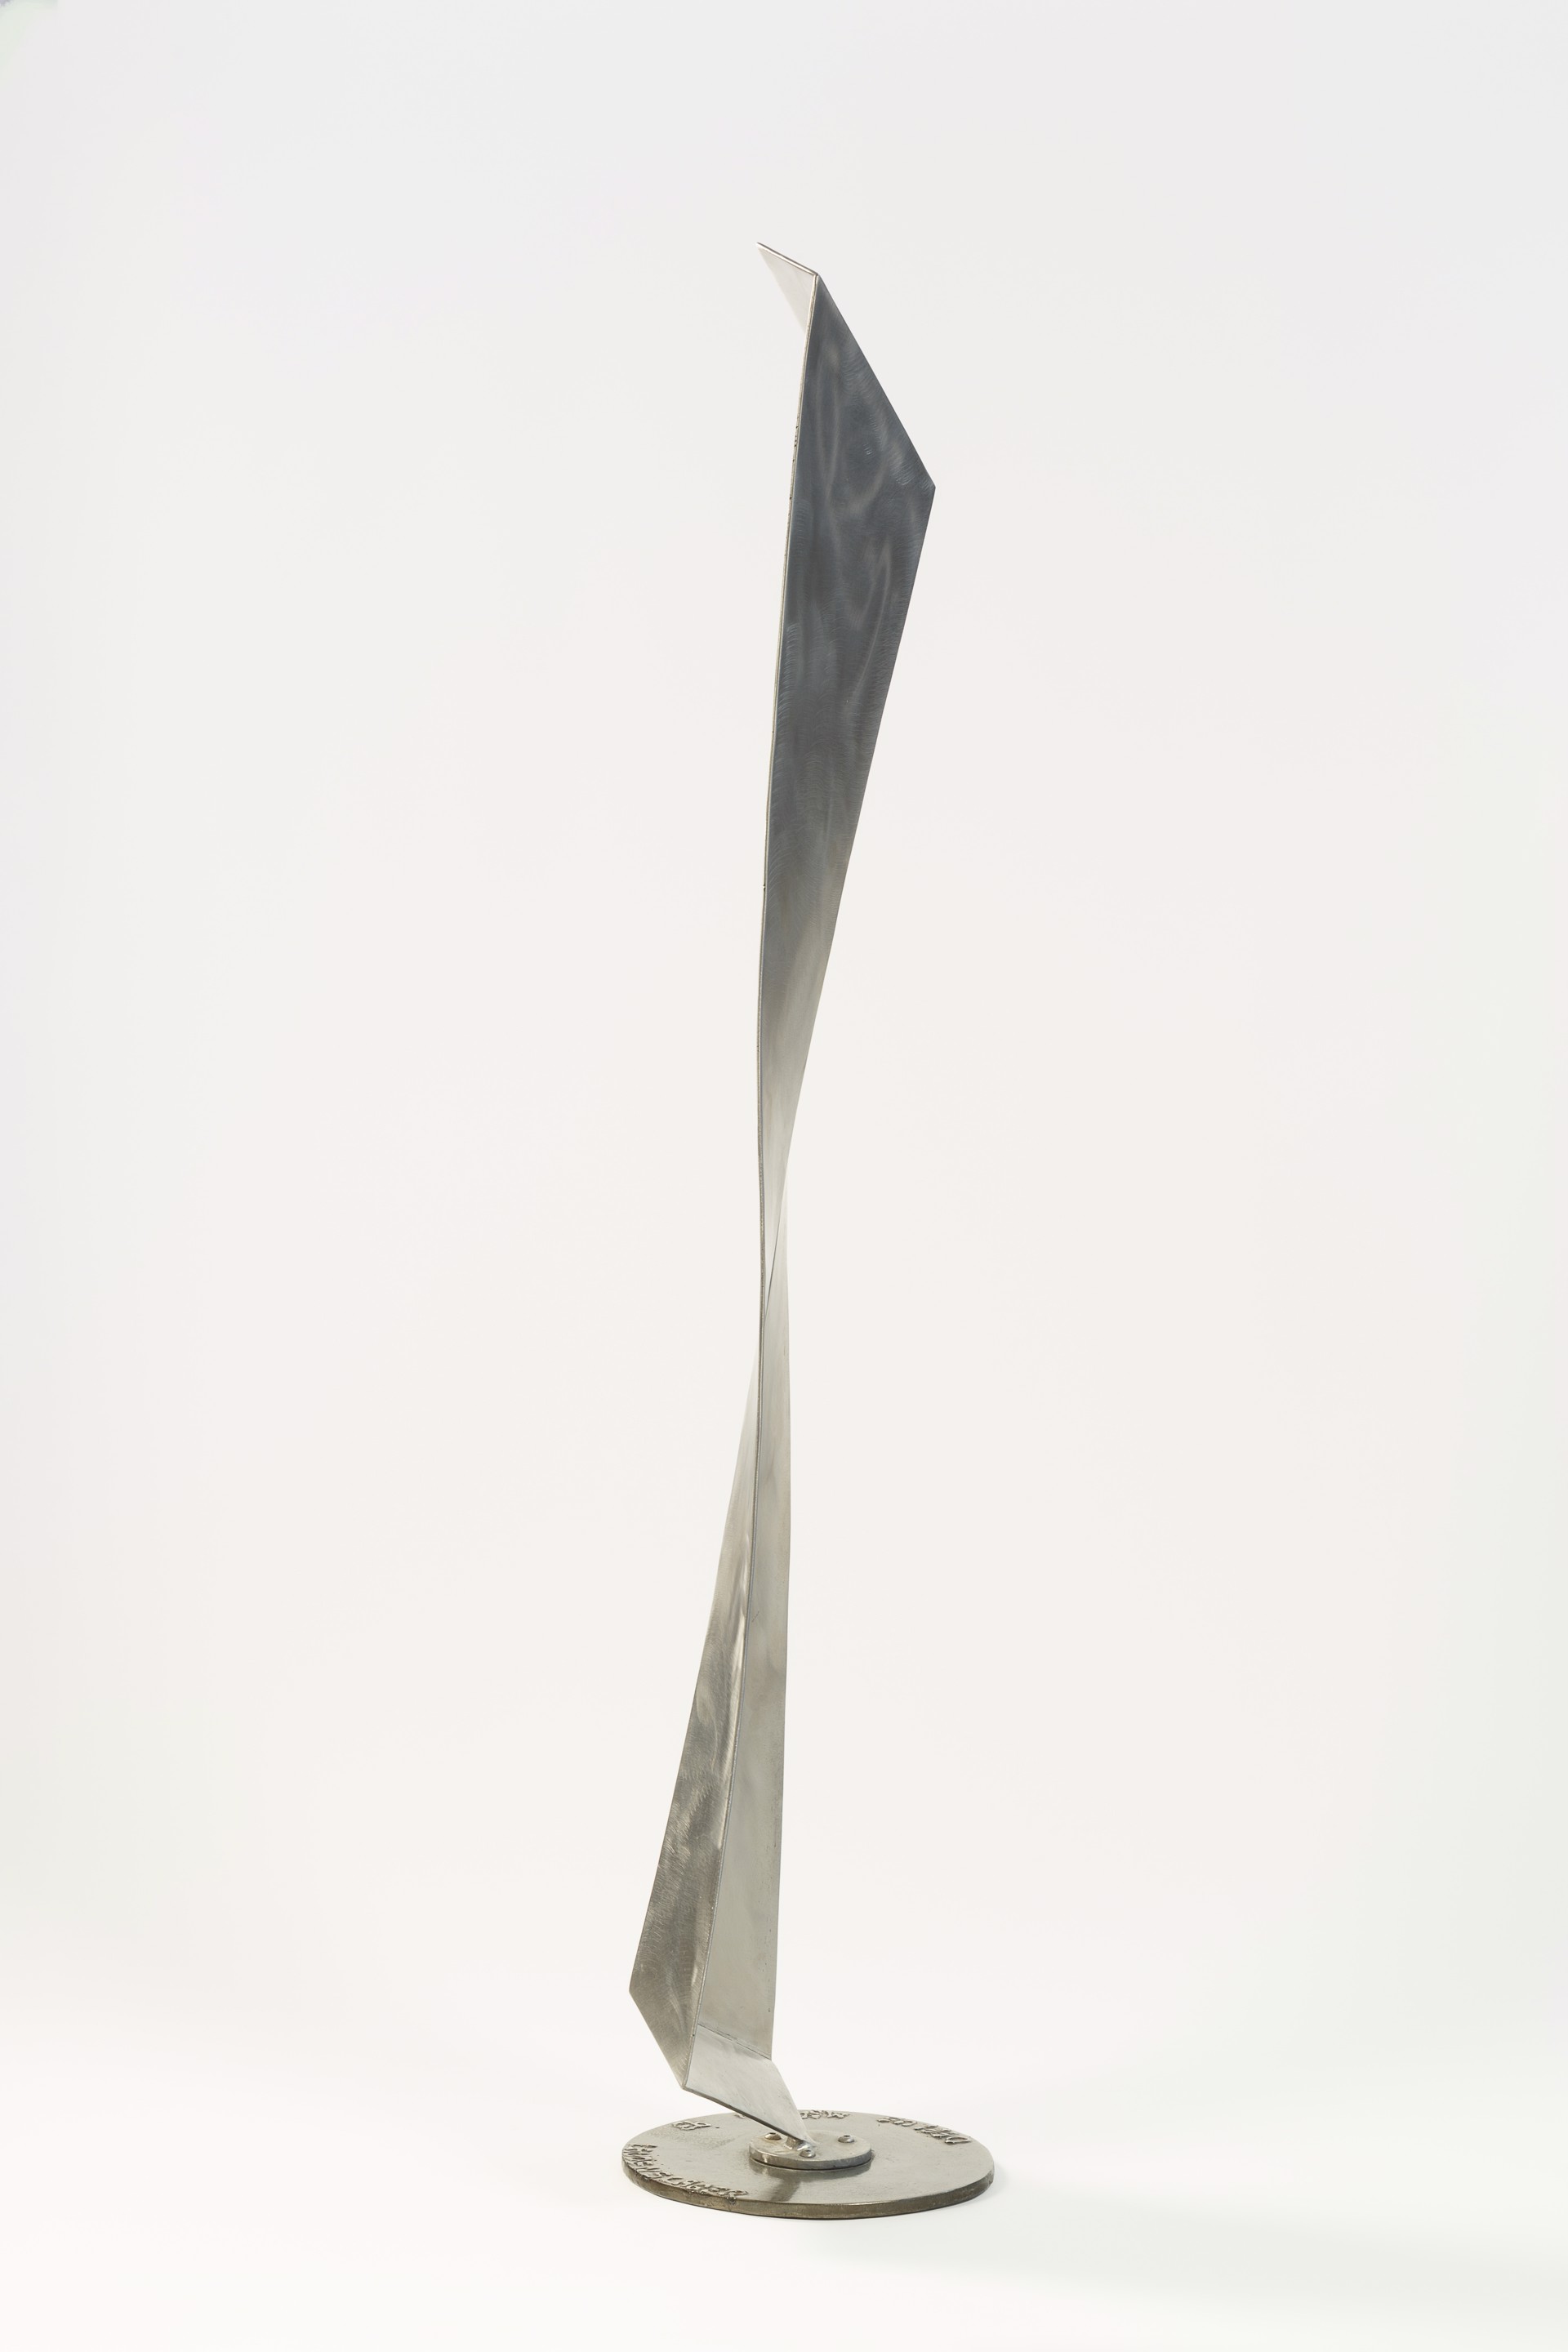 Obelus Malibu by Jeffrey Laundenslager